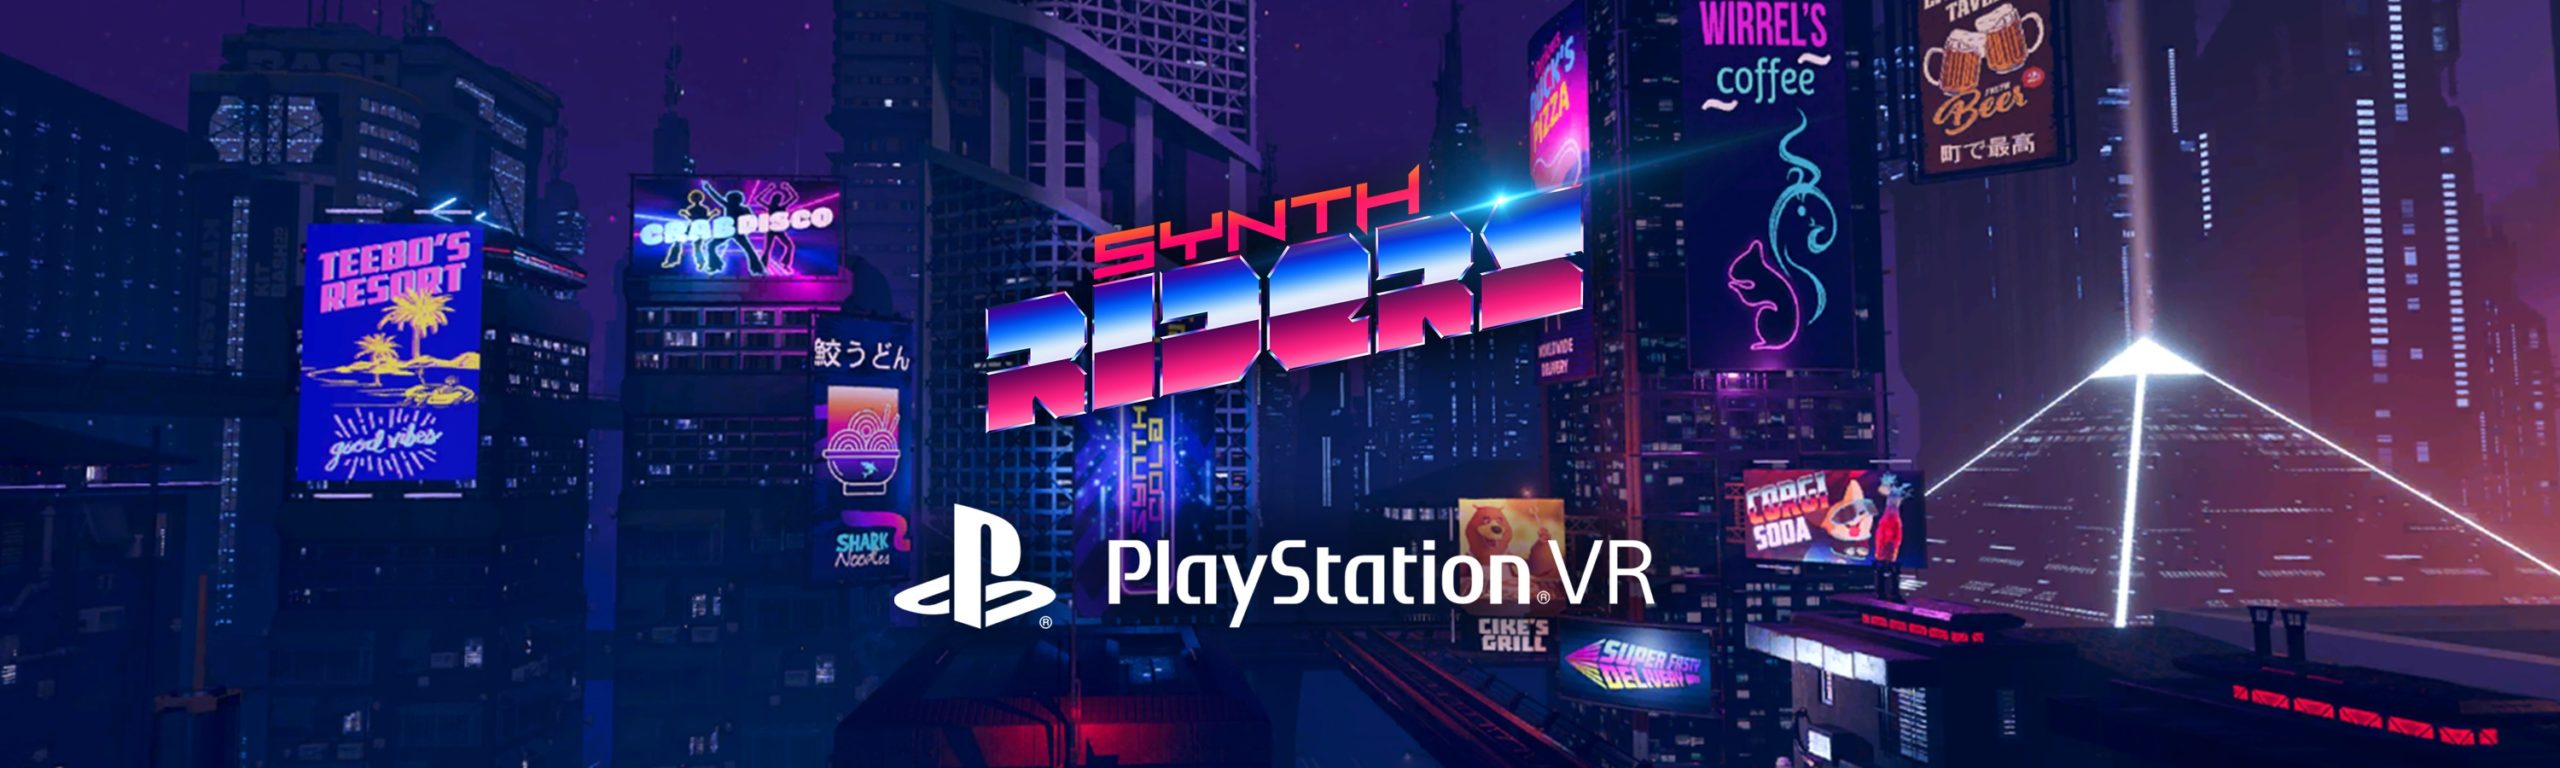 Synth Riders PlayStation VR PSVR banner